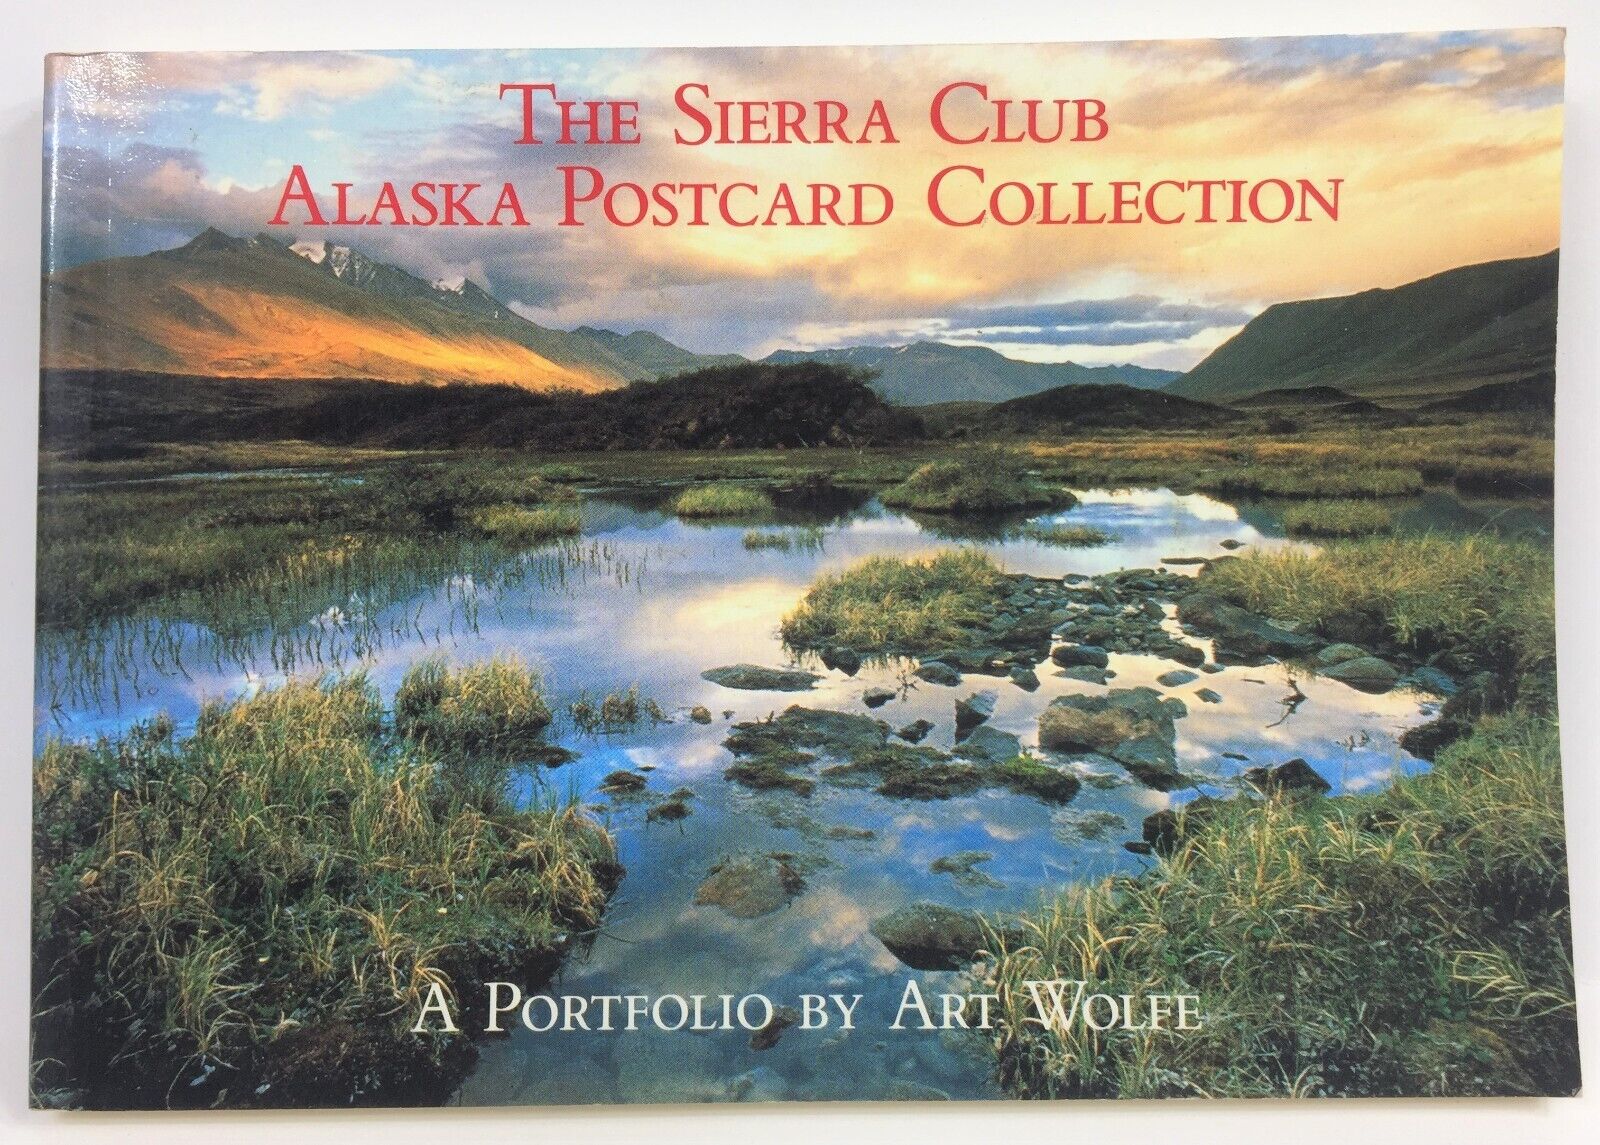 Alaska Postcard Collection Portfolio Book Art Wolfe Wildlife Photographer Sierra